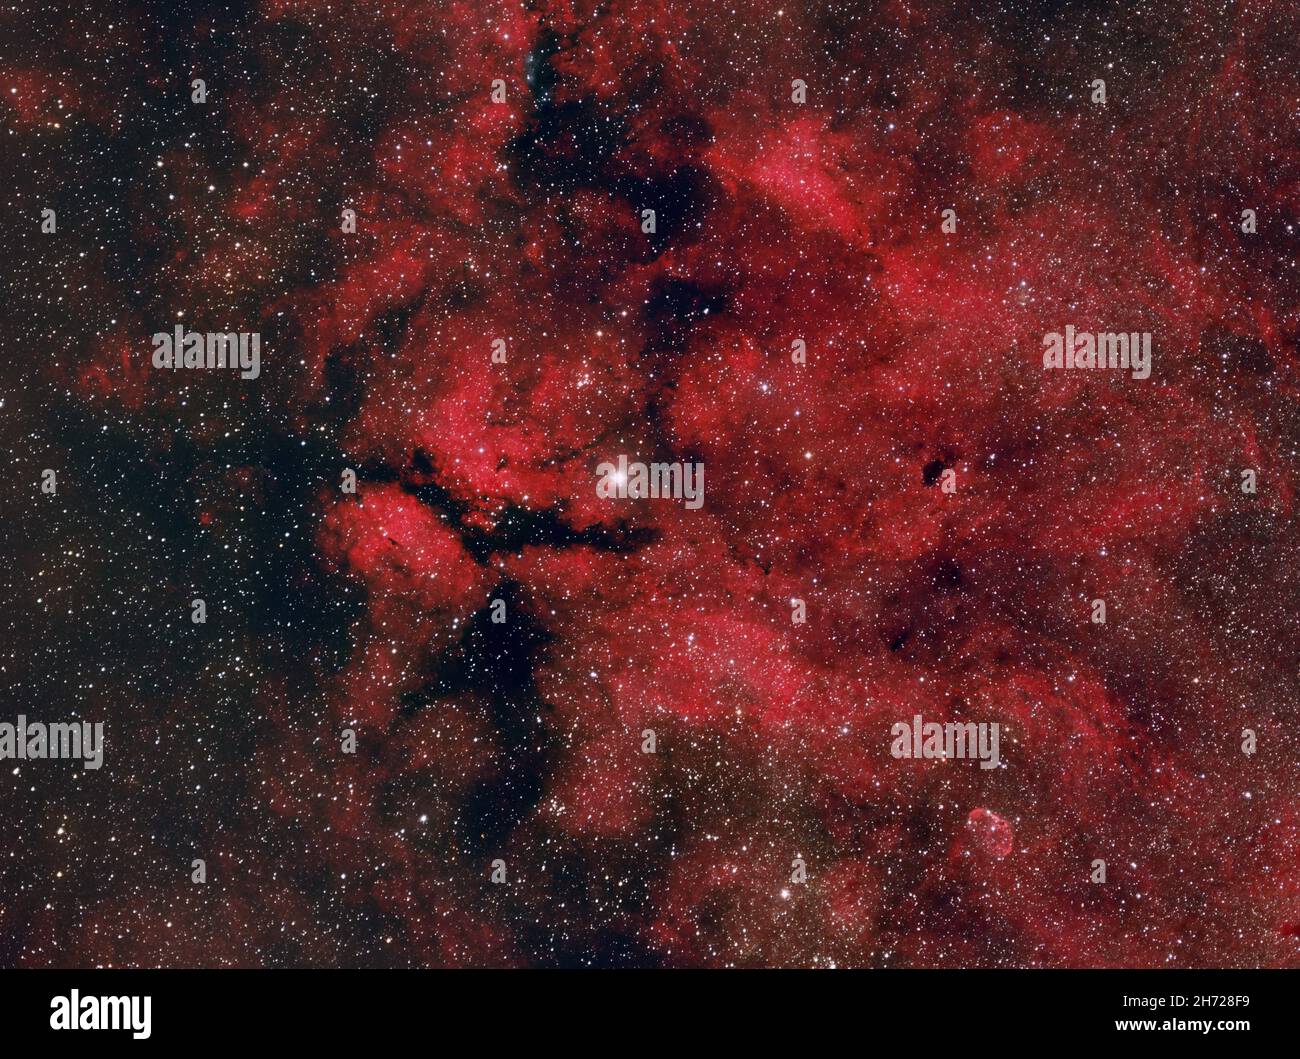 Sadr region in Cygnus constellation Stock Photo